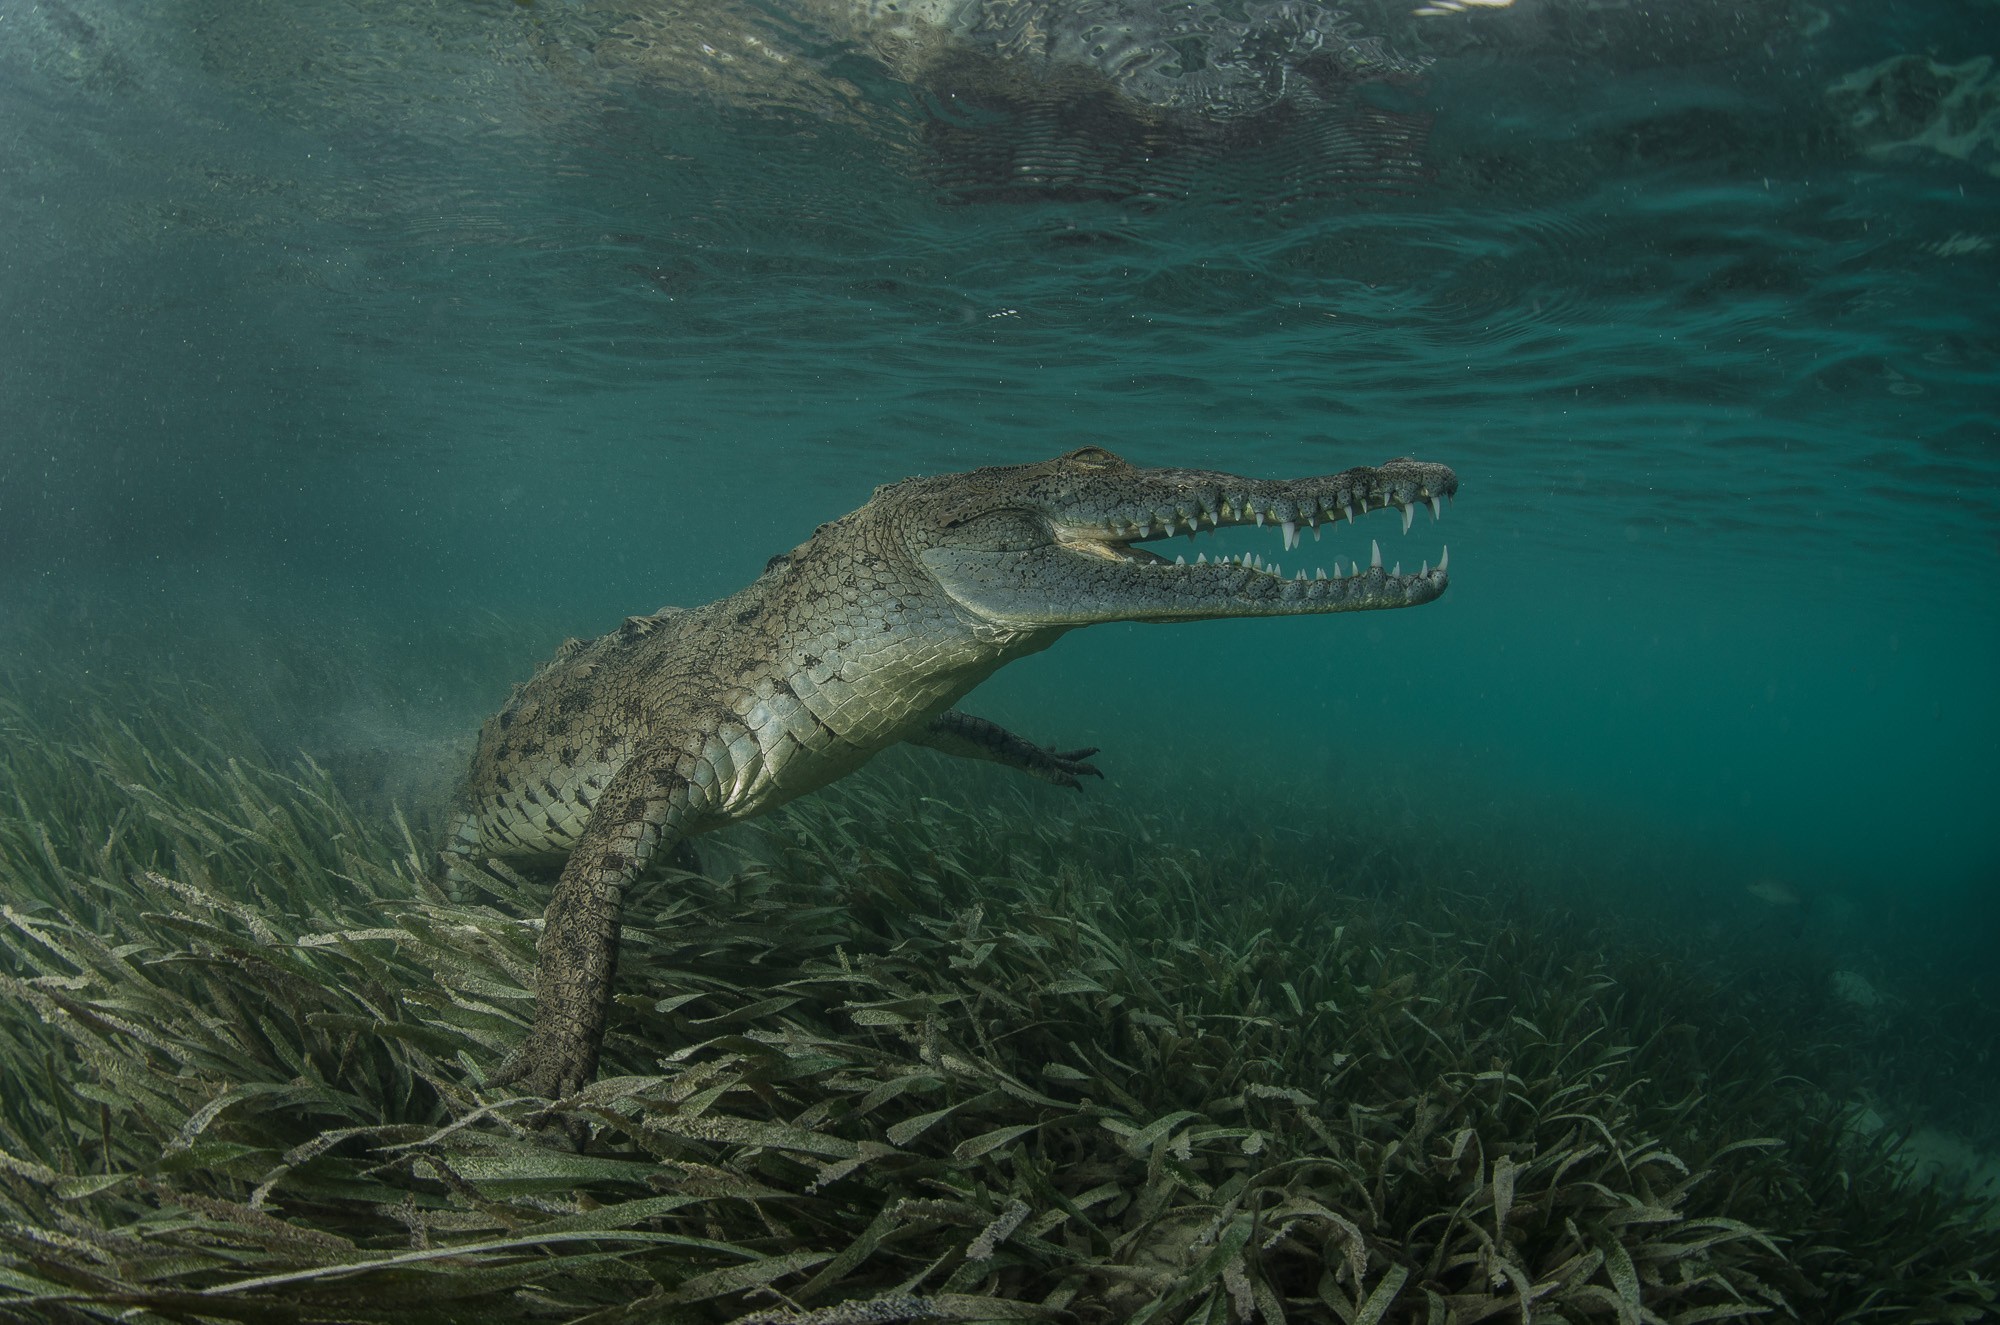 General 2000x1325 animals nature crocodiles underwater reptiles